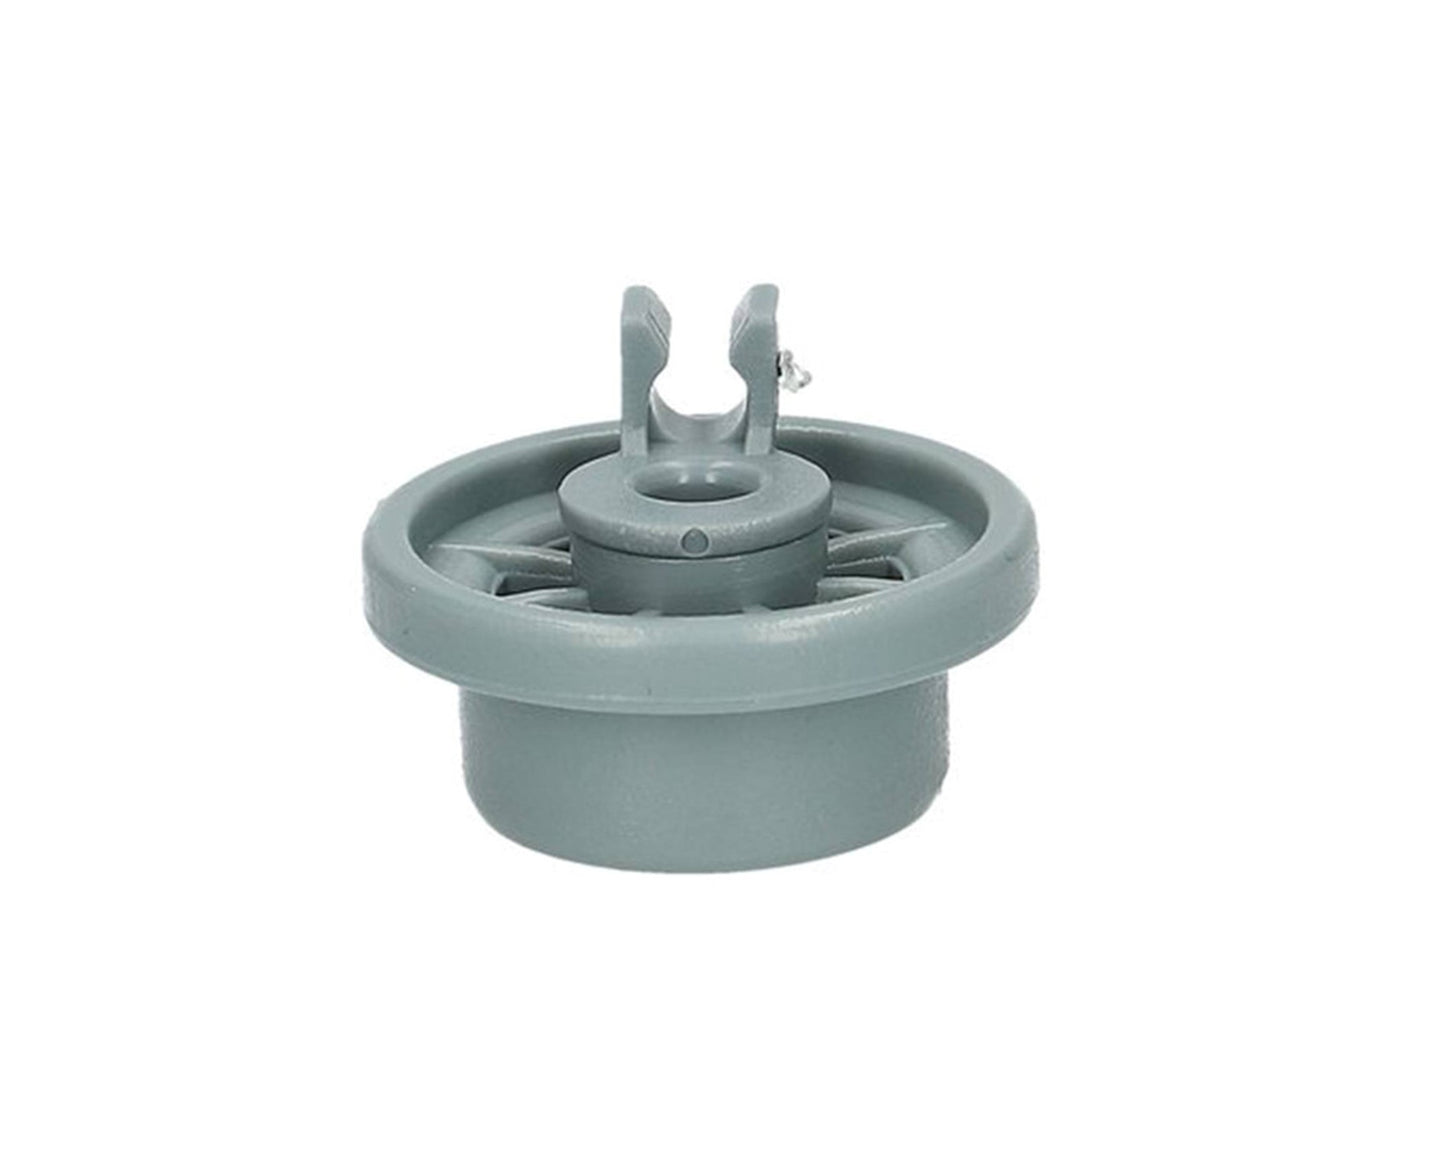 Dishwasher Lower Basket Wheel for Creda 47918 Hotpoint - C00210742, J00673065, ES490449